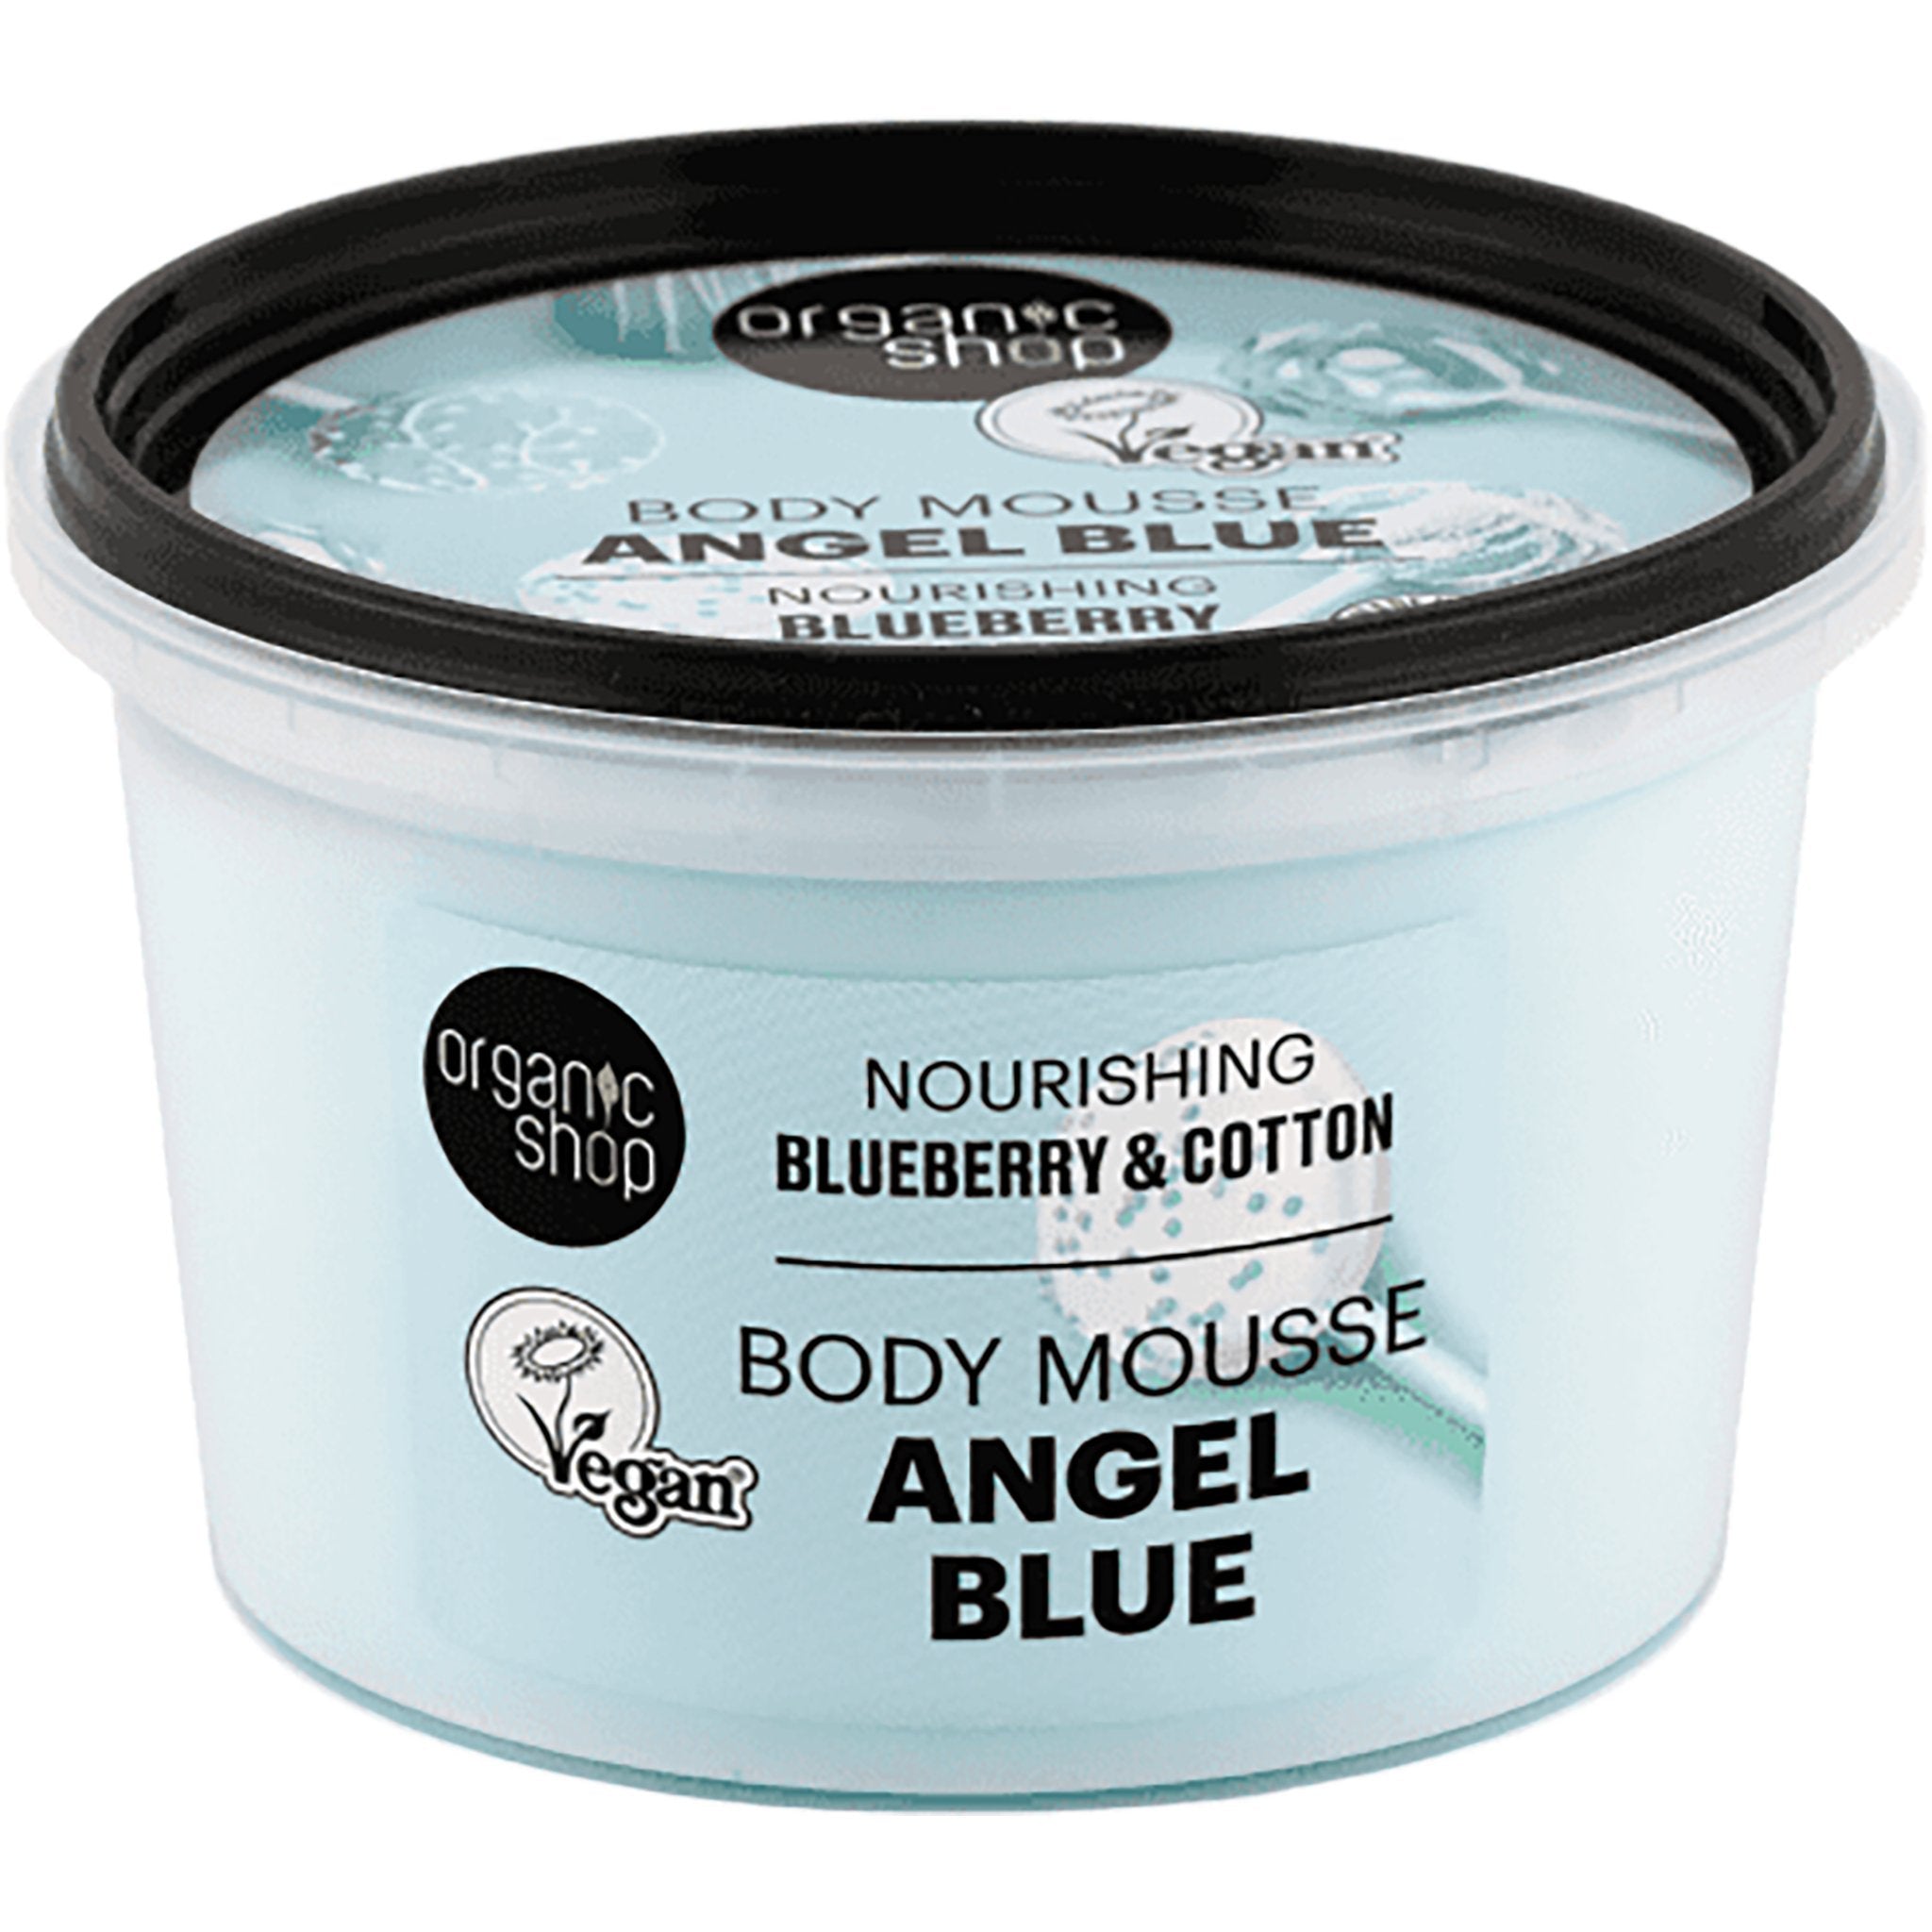 Body Souffle | Angel Blue Blueberry & Cotton - mypure.co.uk